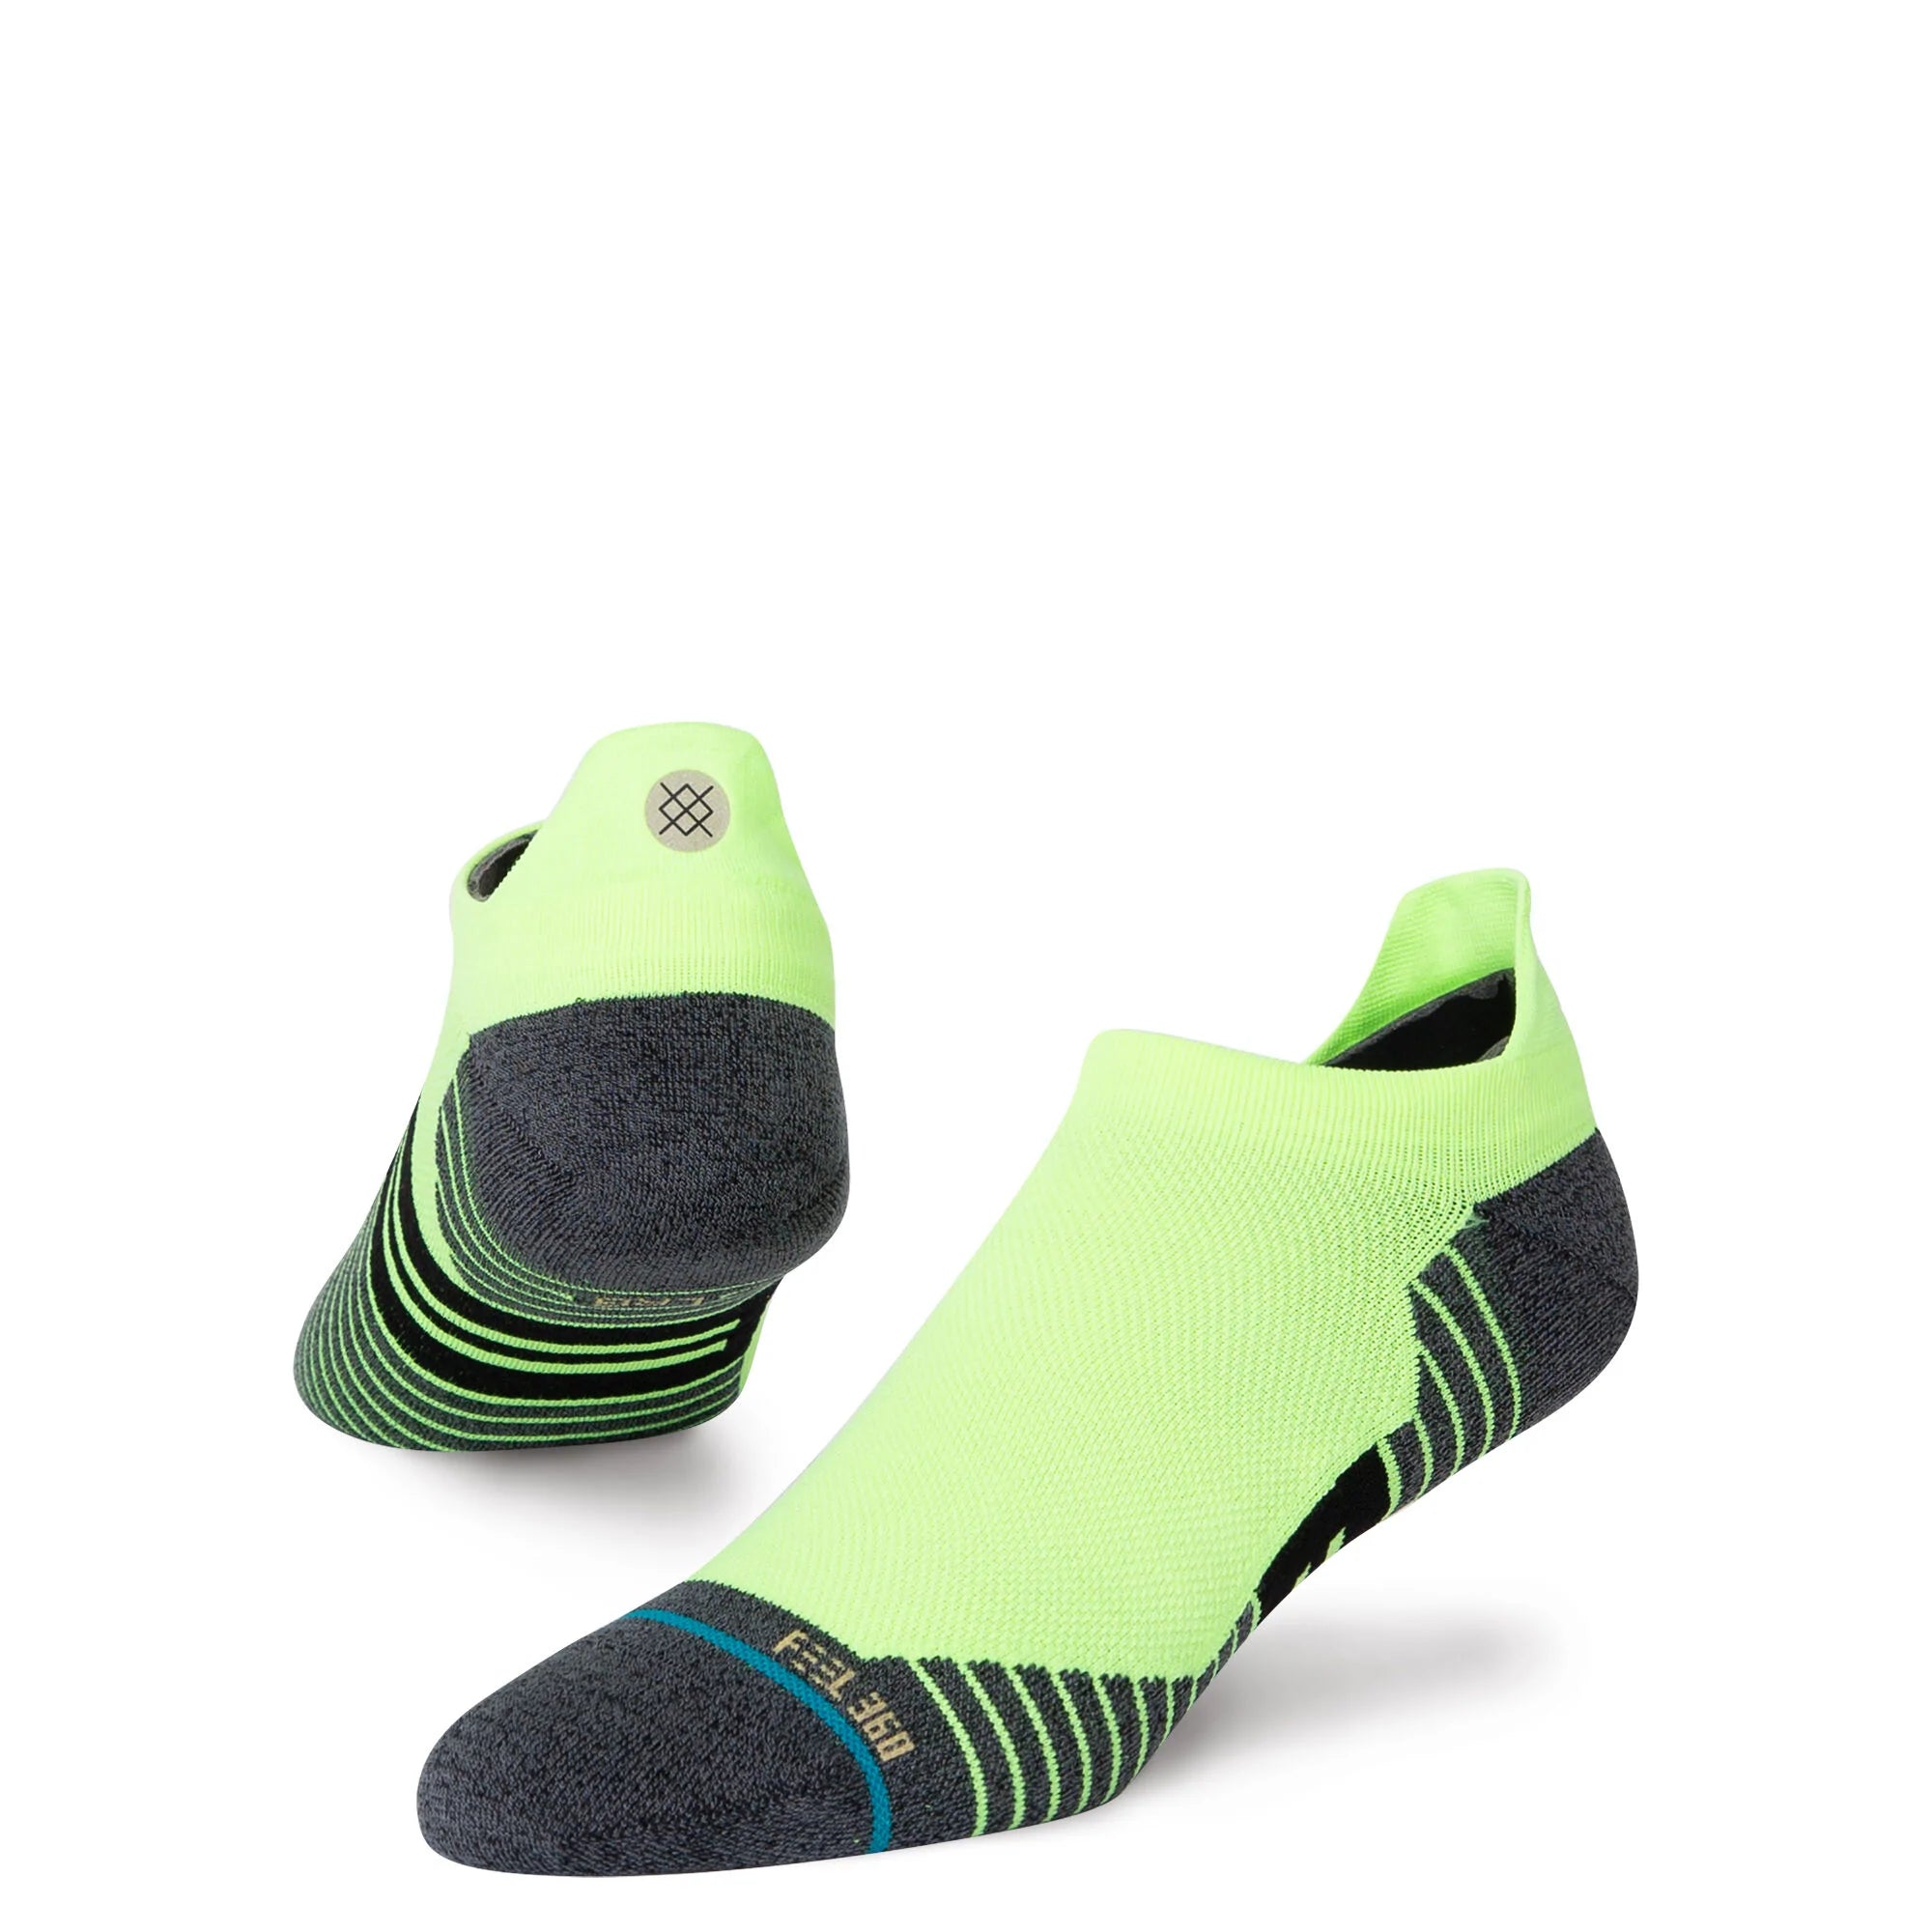 Stance Socks Maxed Crew - Neon Green - Centurion Running Ltd